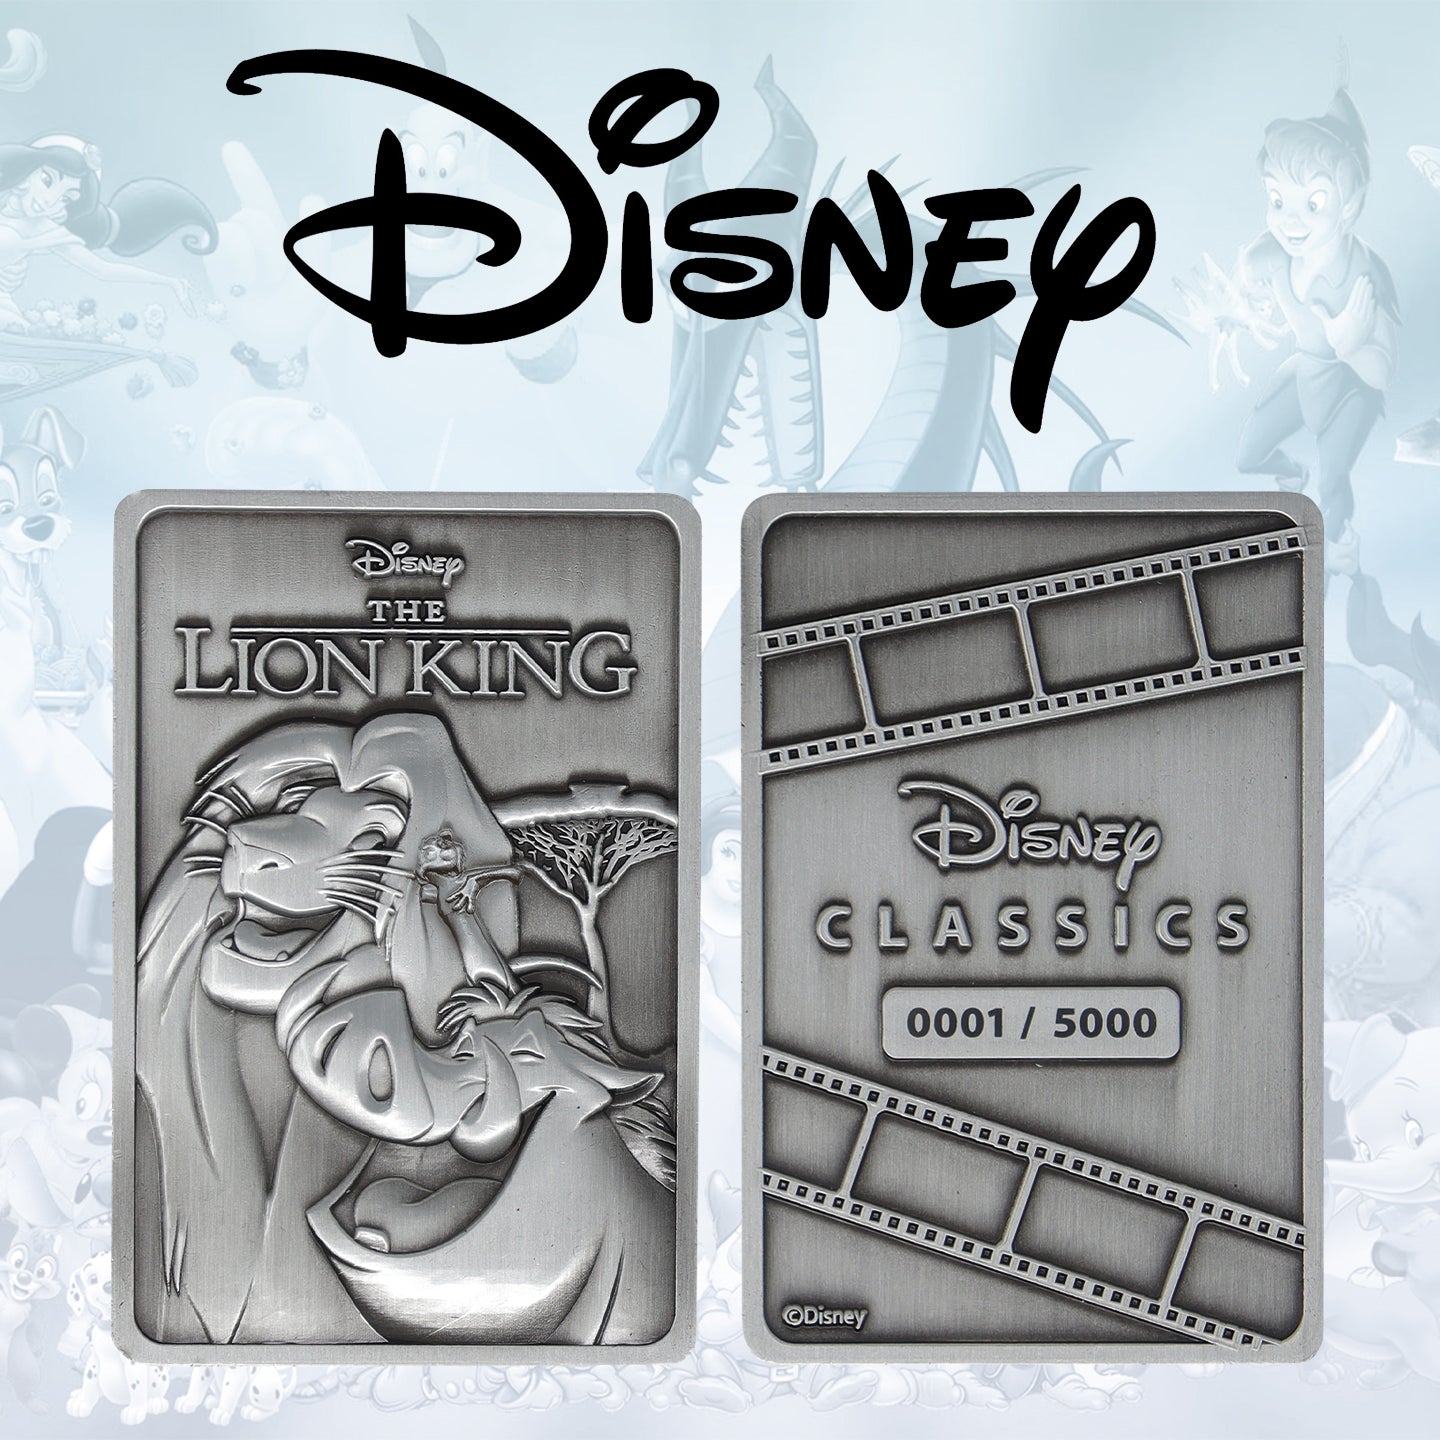 Disney Limited Edition Lion King Ingot